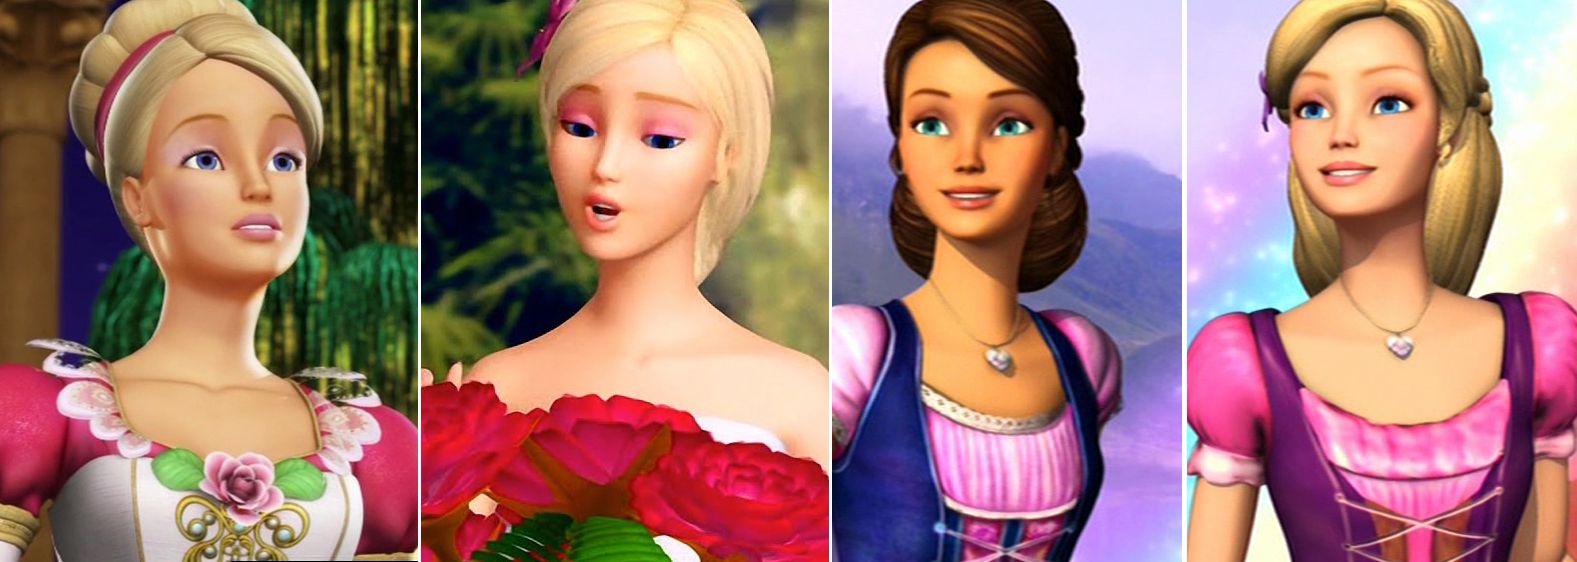 Nama-nama Barbie - Genevieve, Rosella, Liana dan Alexa